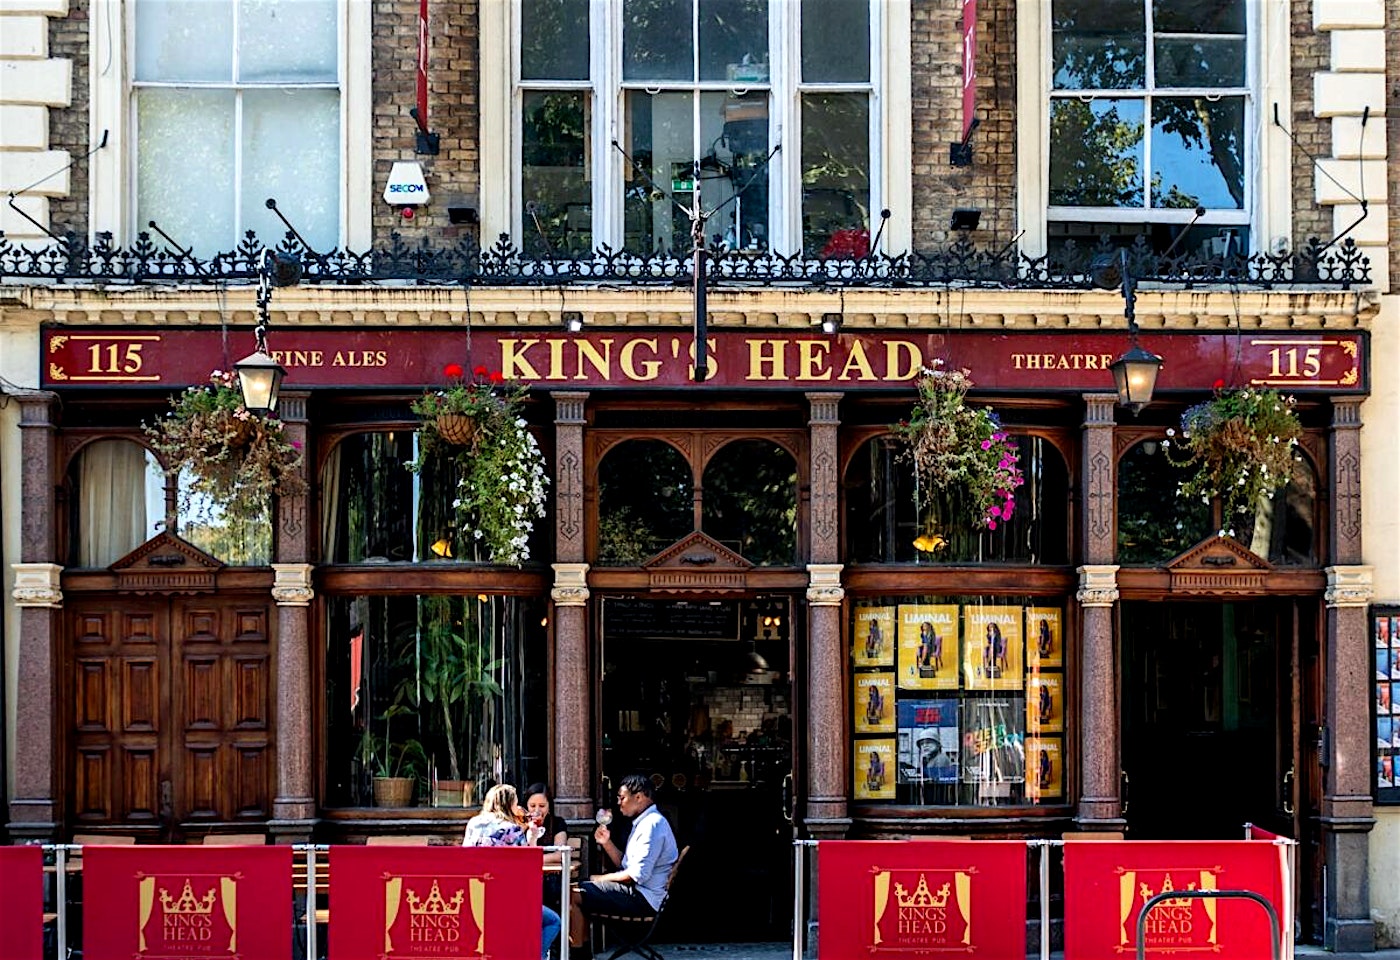 King's Head upper street pubs